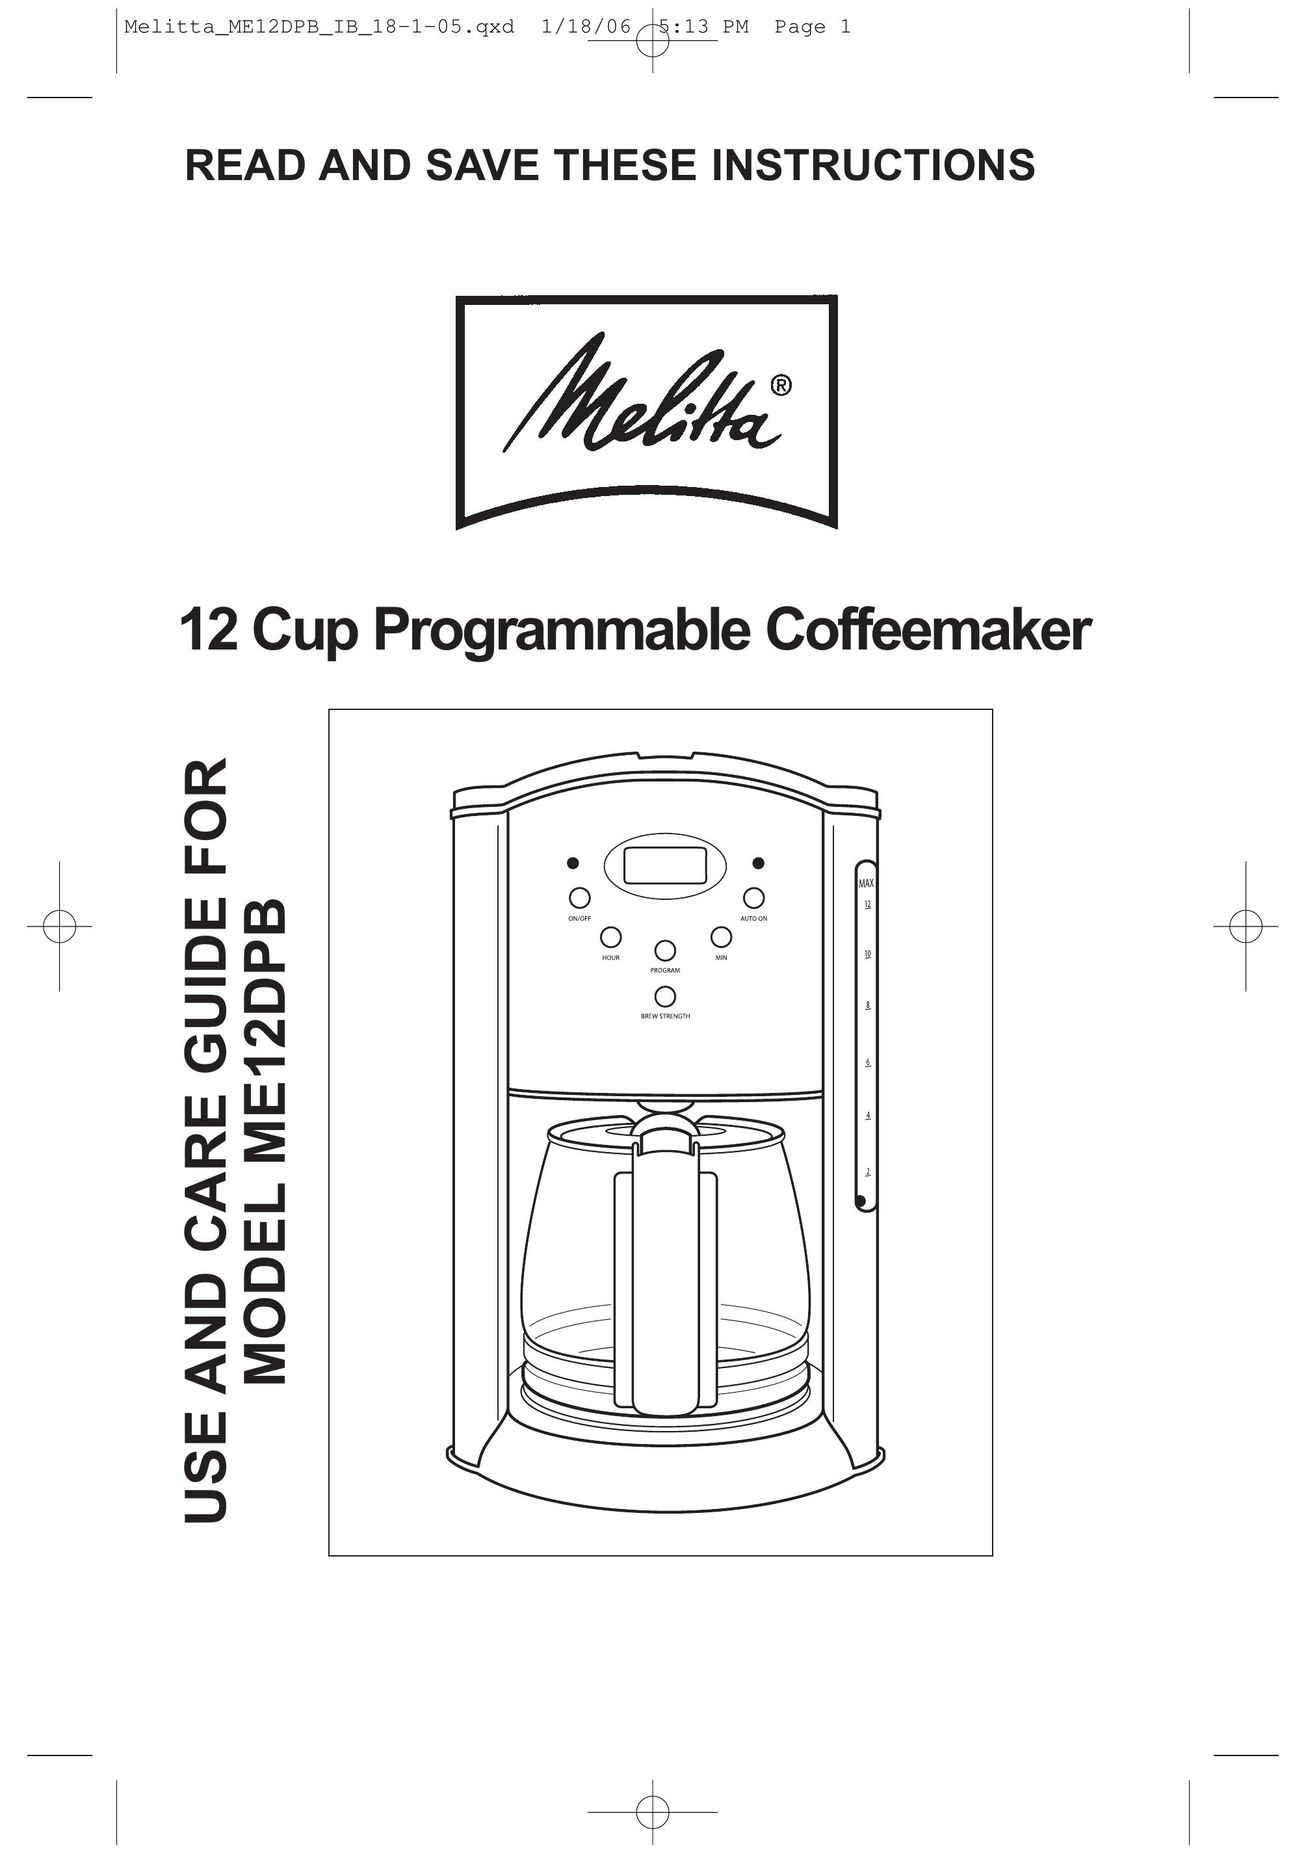 Toastmaster ME12DPB Coffeemaker User Manual